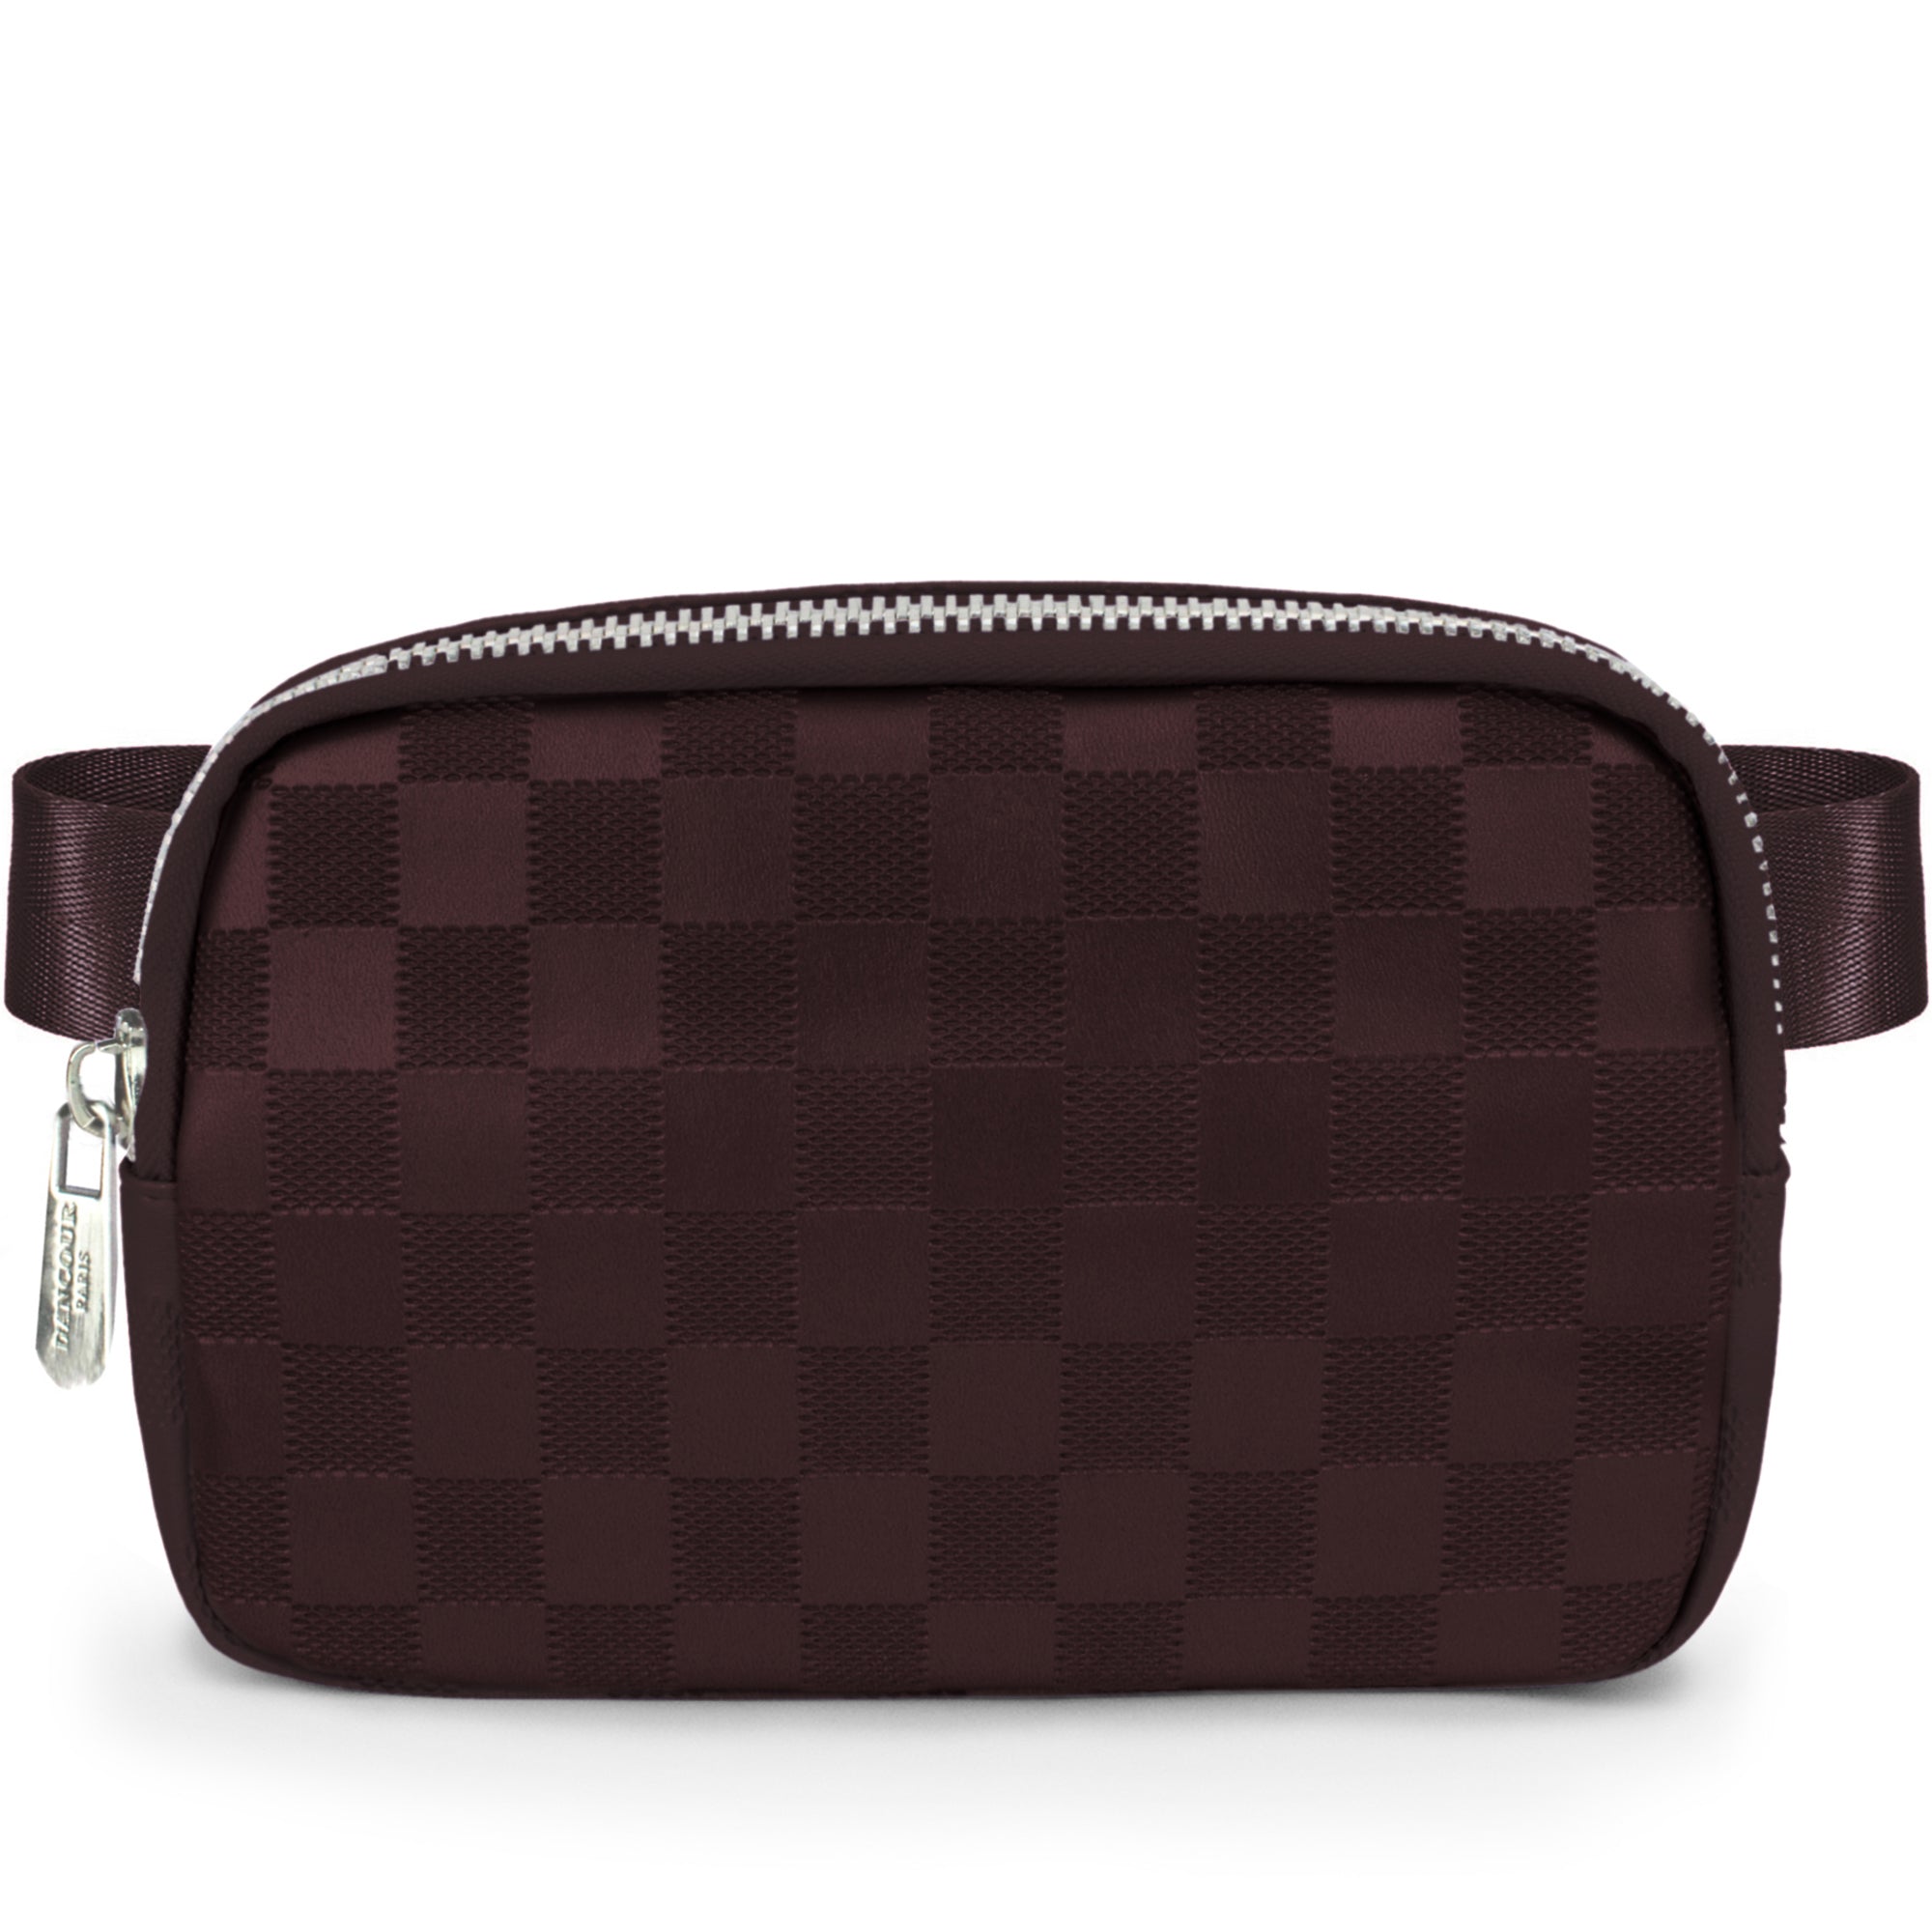 Checkered Belt Bag - Red Fanny Pack For Women - Crossbody Waist Bag